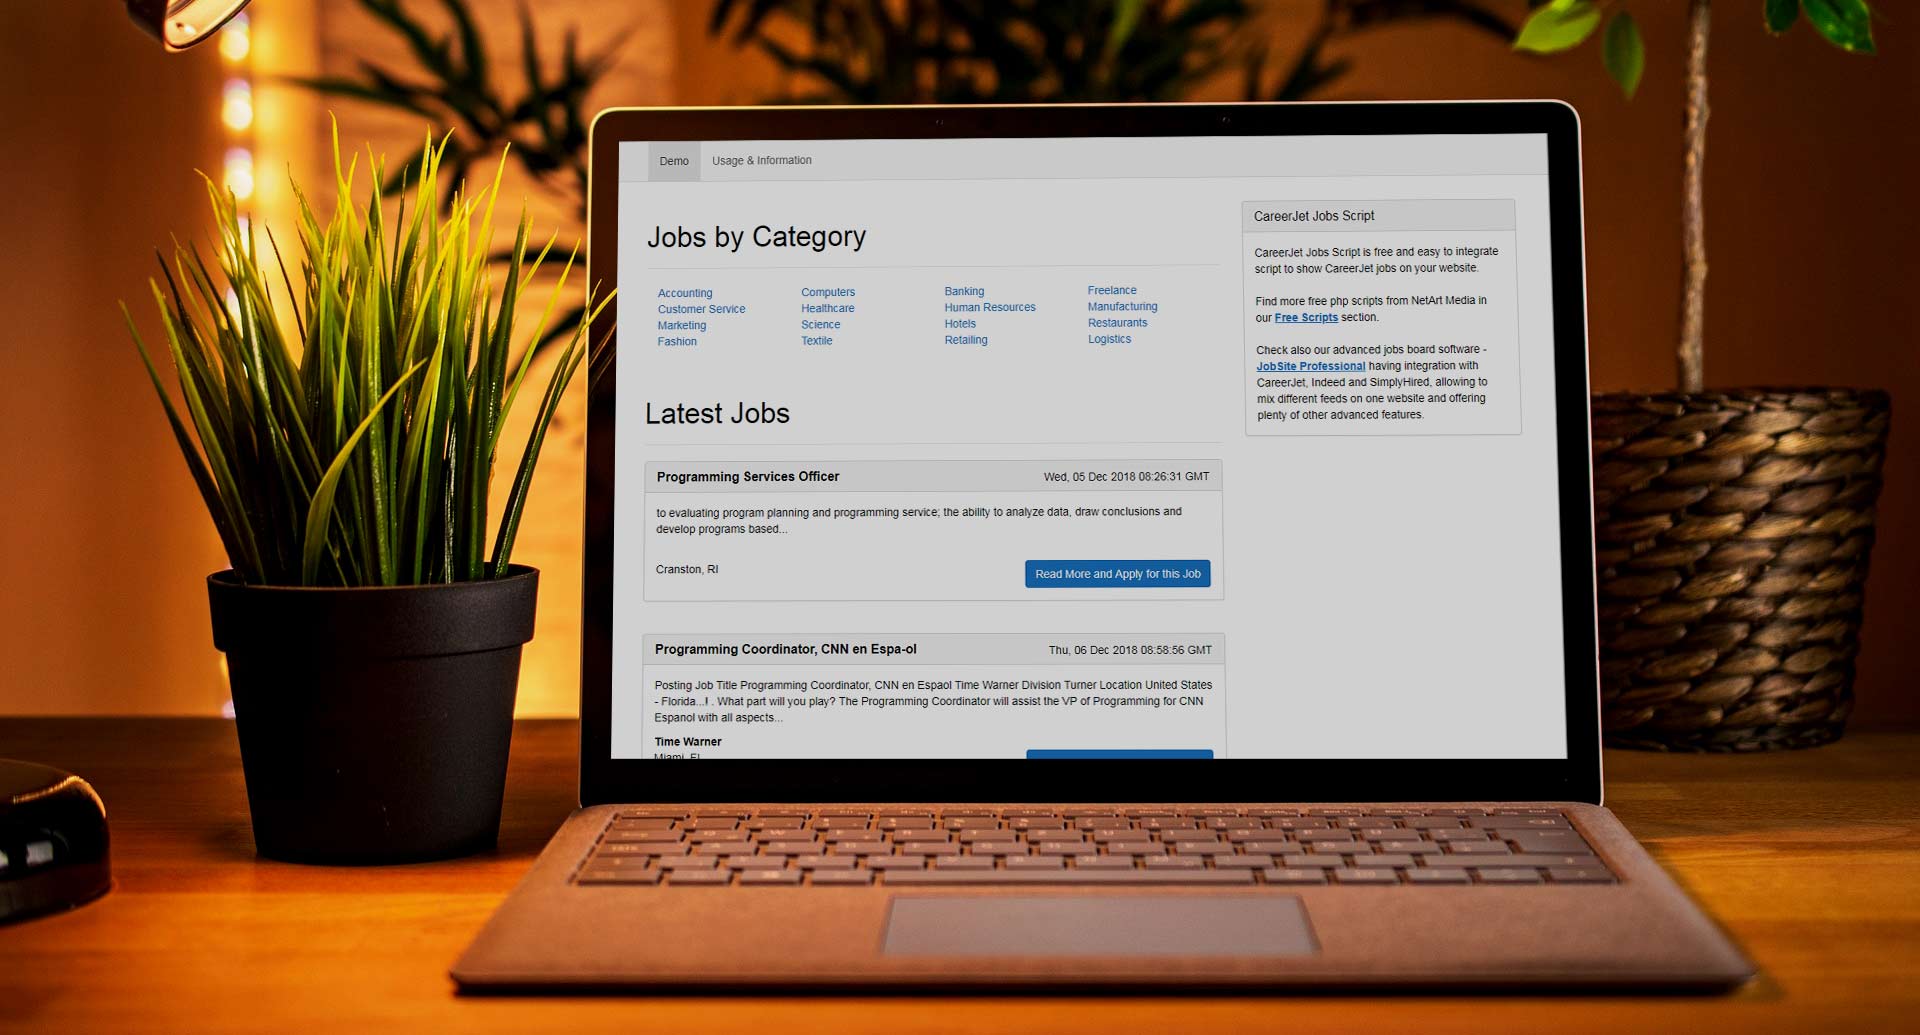 Updated version of our free CareerJet Jobs script